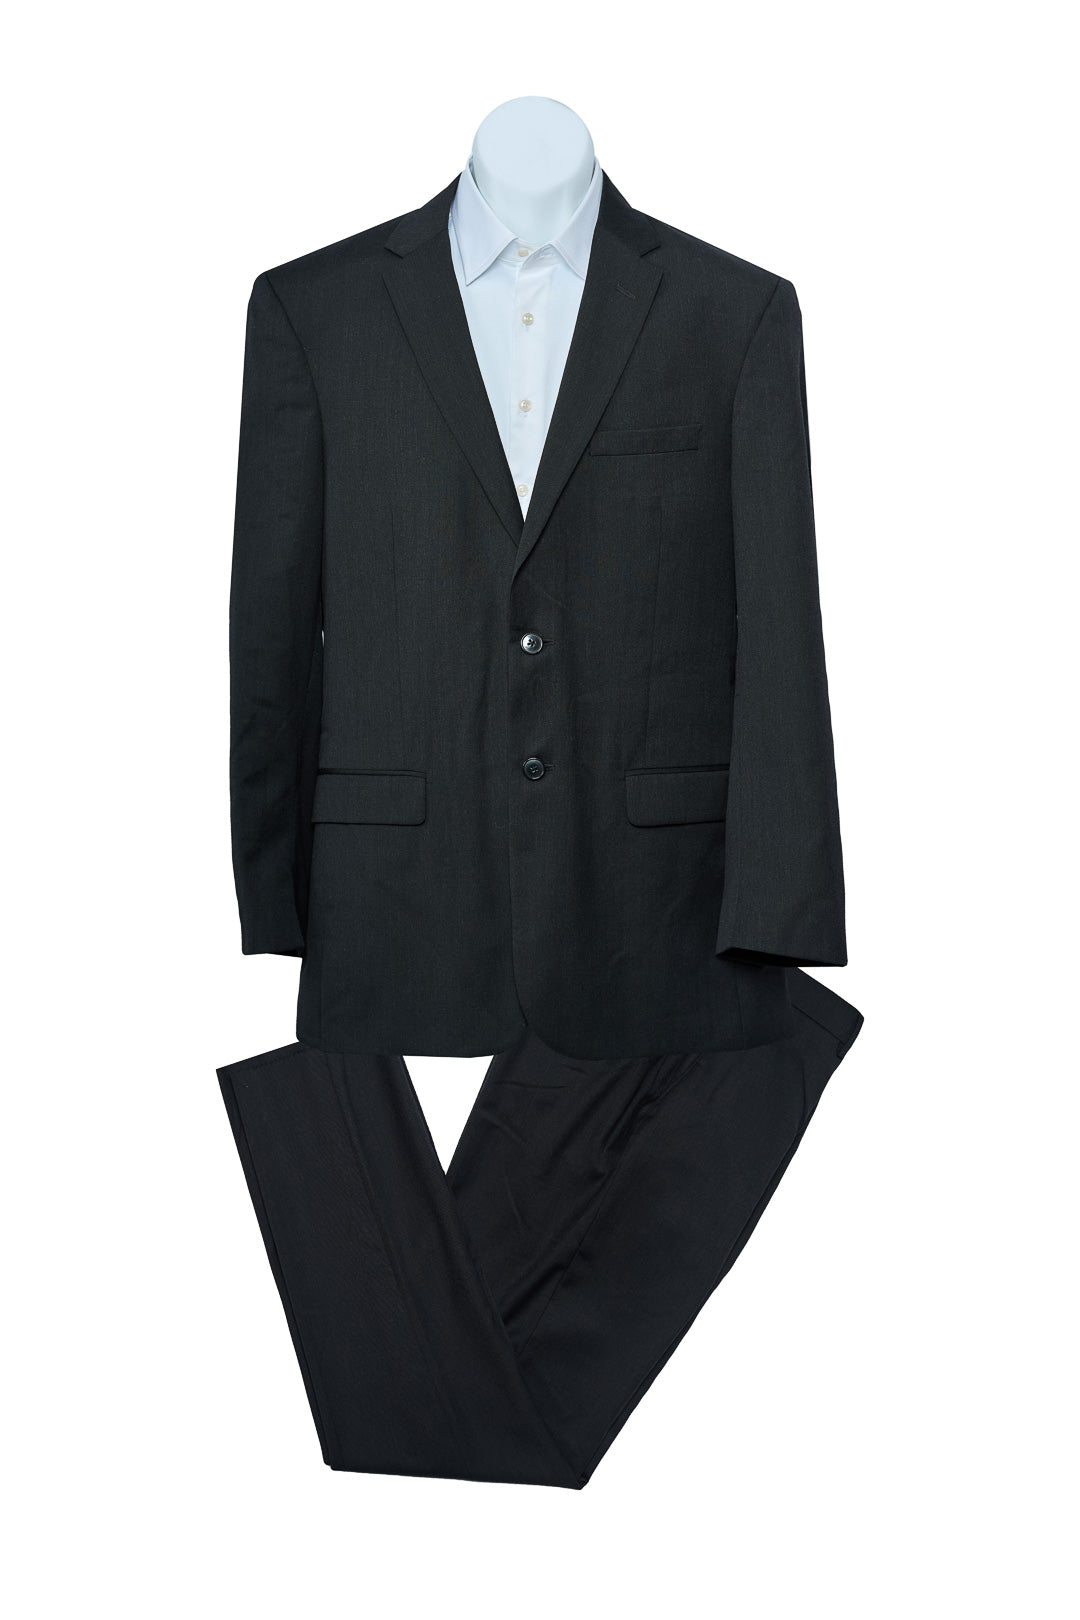 Textured Black Wool Suit